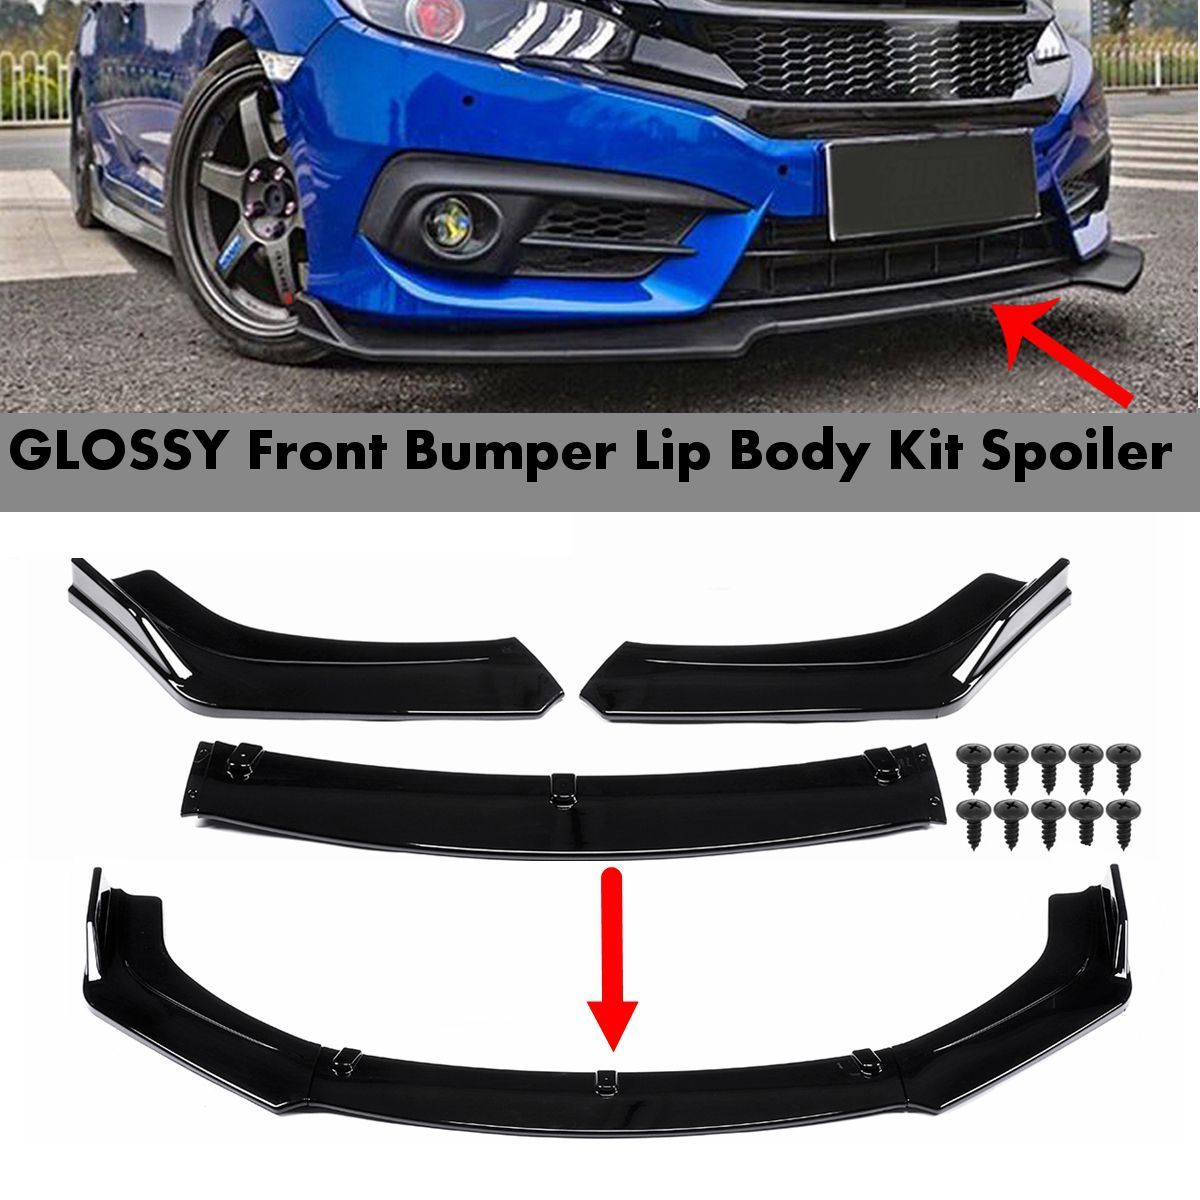 3Pcs-Front-Bumper-Lip-Spoiler-Chin-Splitters-Glossy-Black-For-Honda-Civic-4DR-Sedan-2016-2018-1708538